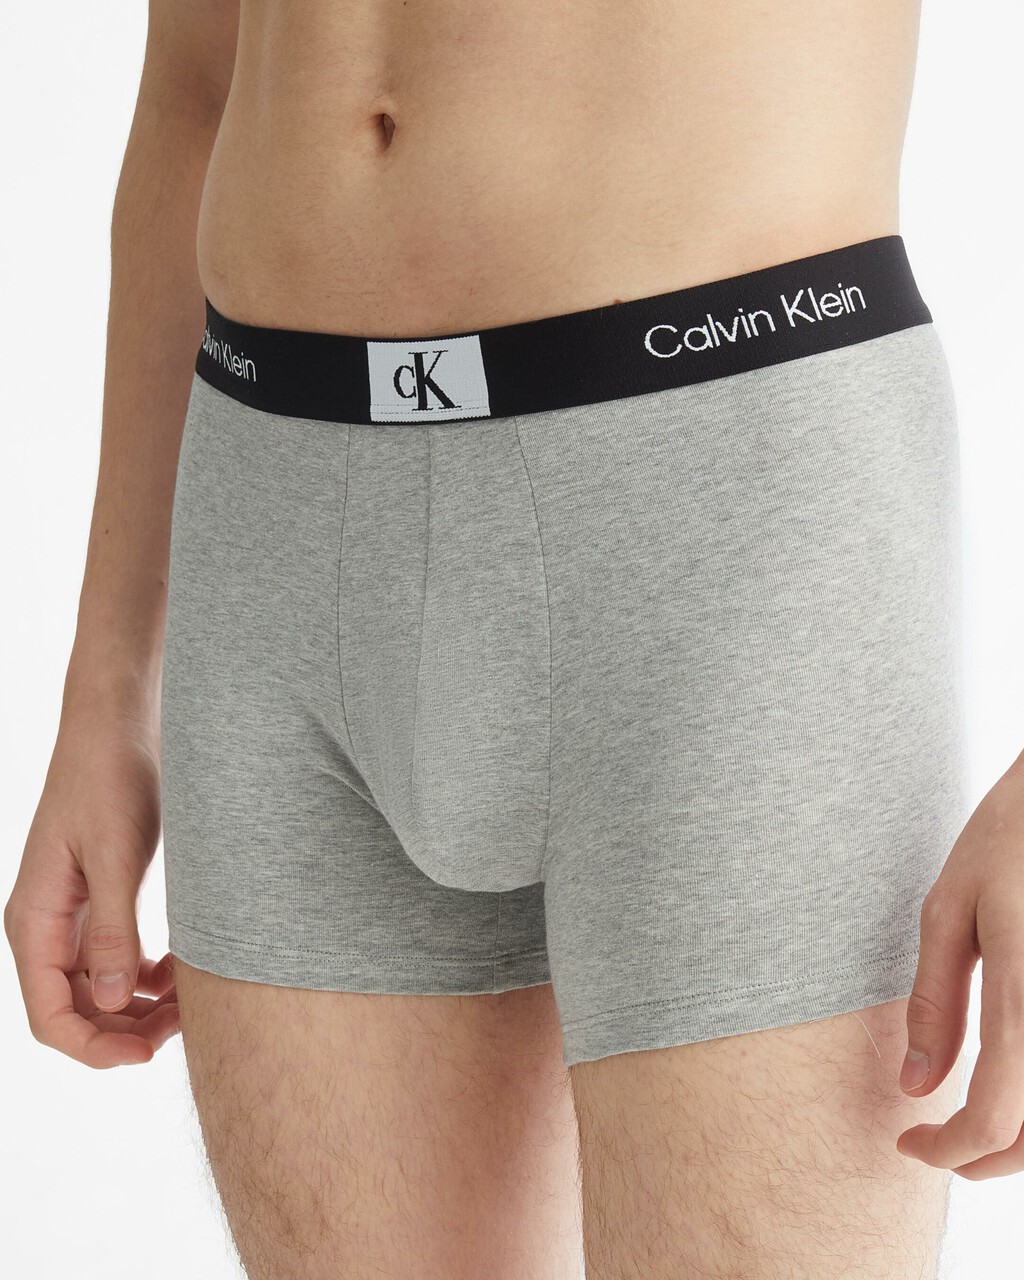 Calvin Klein - Mark Tuan the Calvin Klein 1996 Low Rise Trunk. Shop  underwear